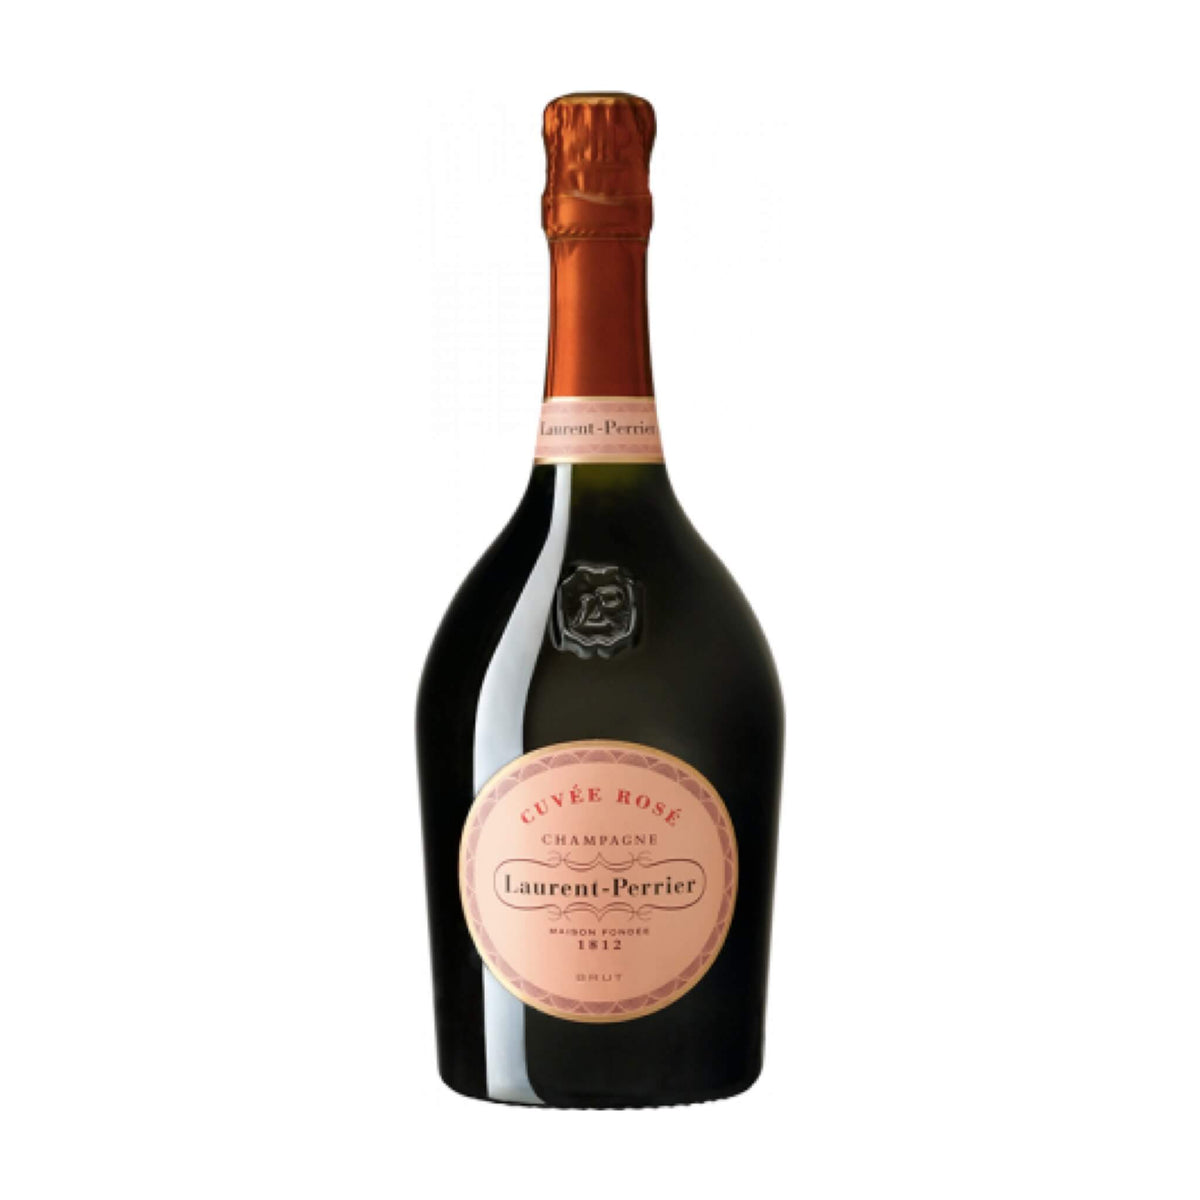 Champagne Laurent-Perrier - Rosé Brut WINECOM AOC Champagne 